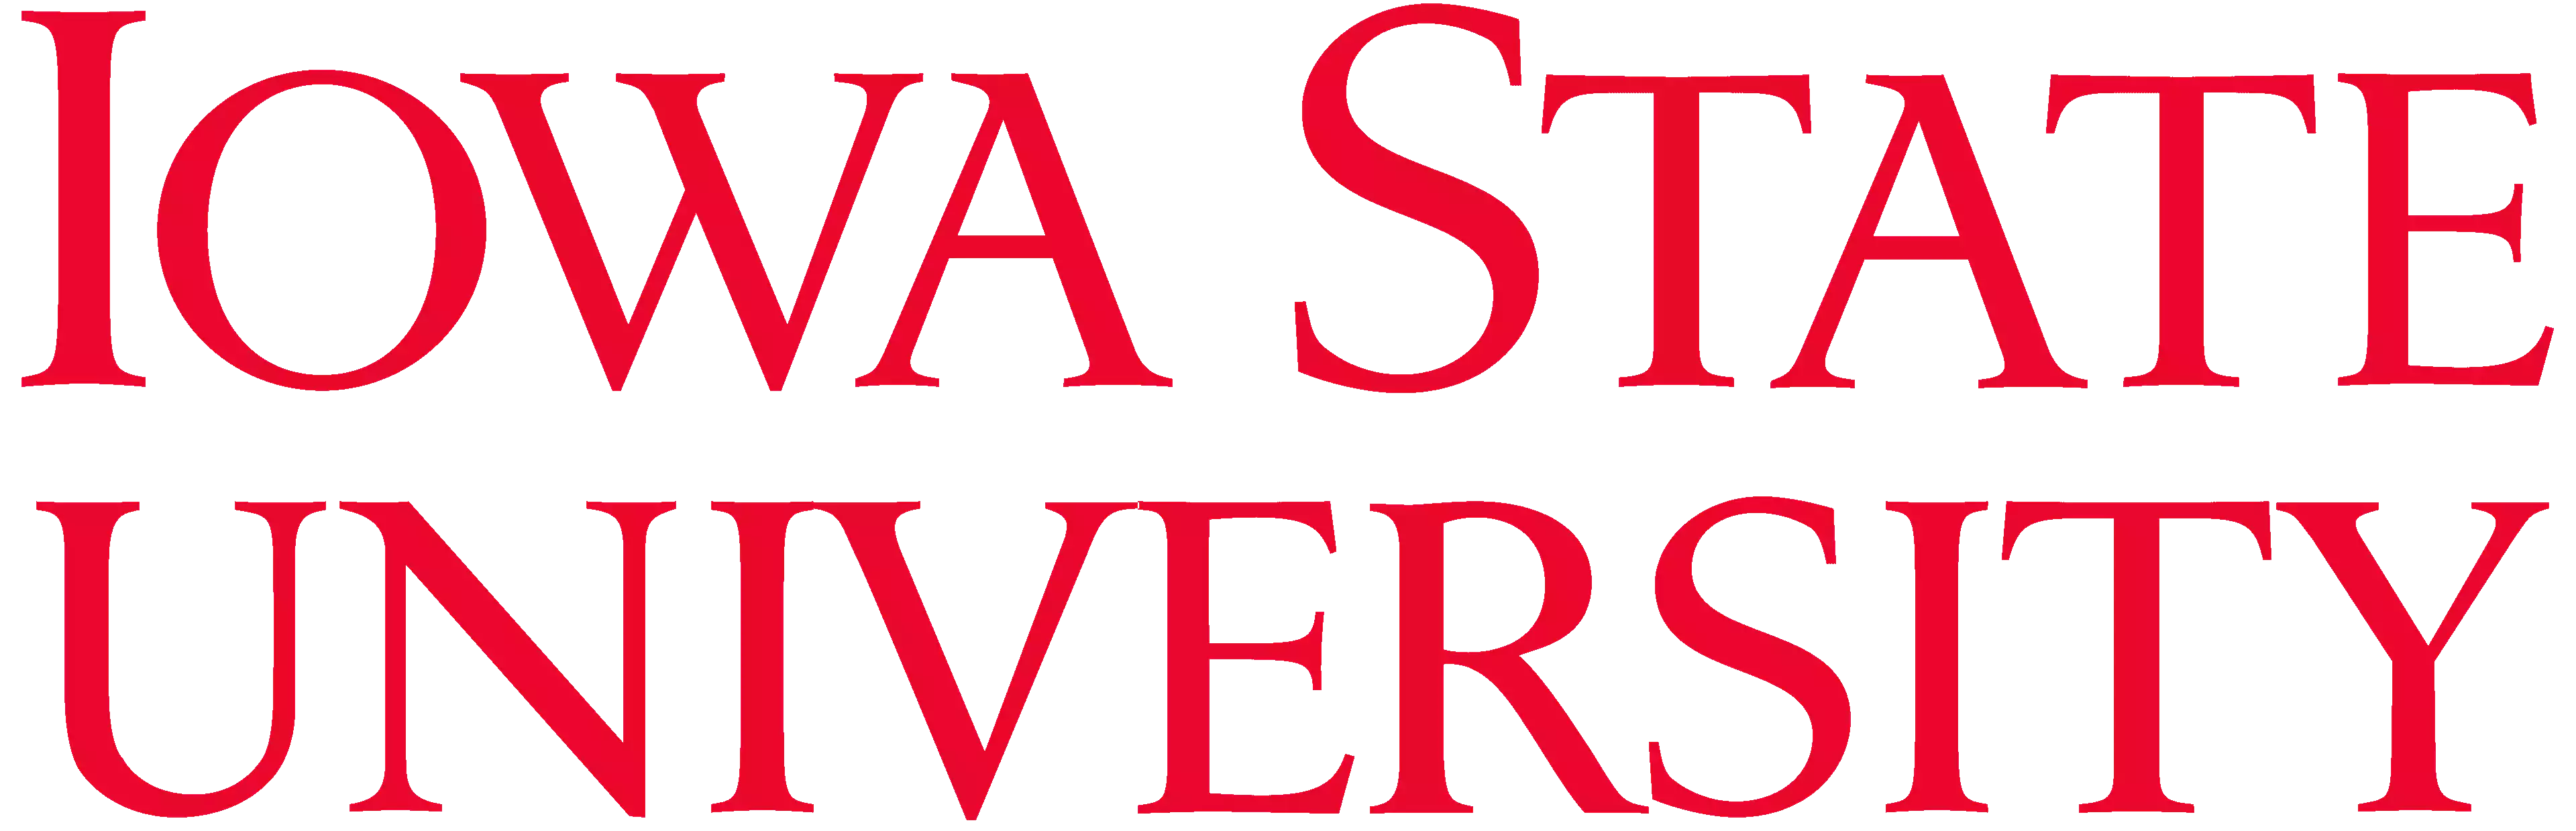 Iowa State University Logo in Color